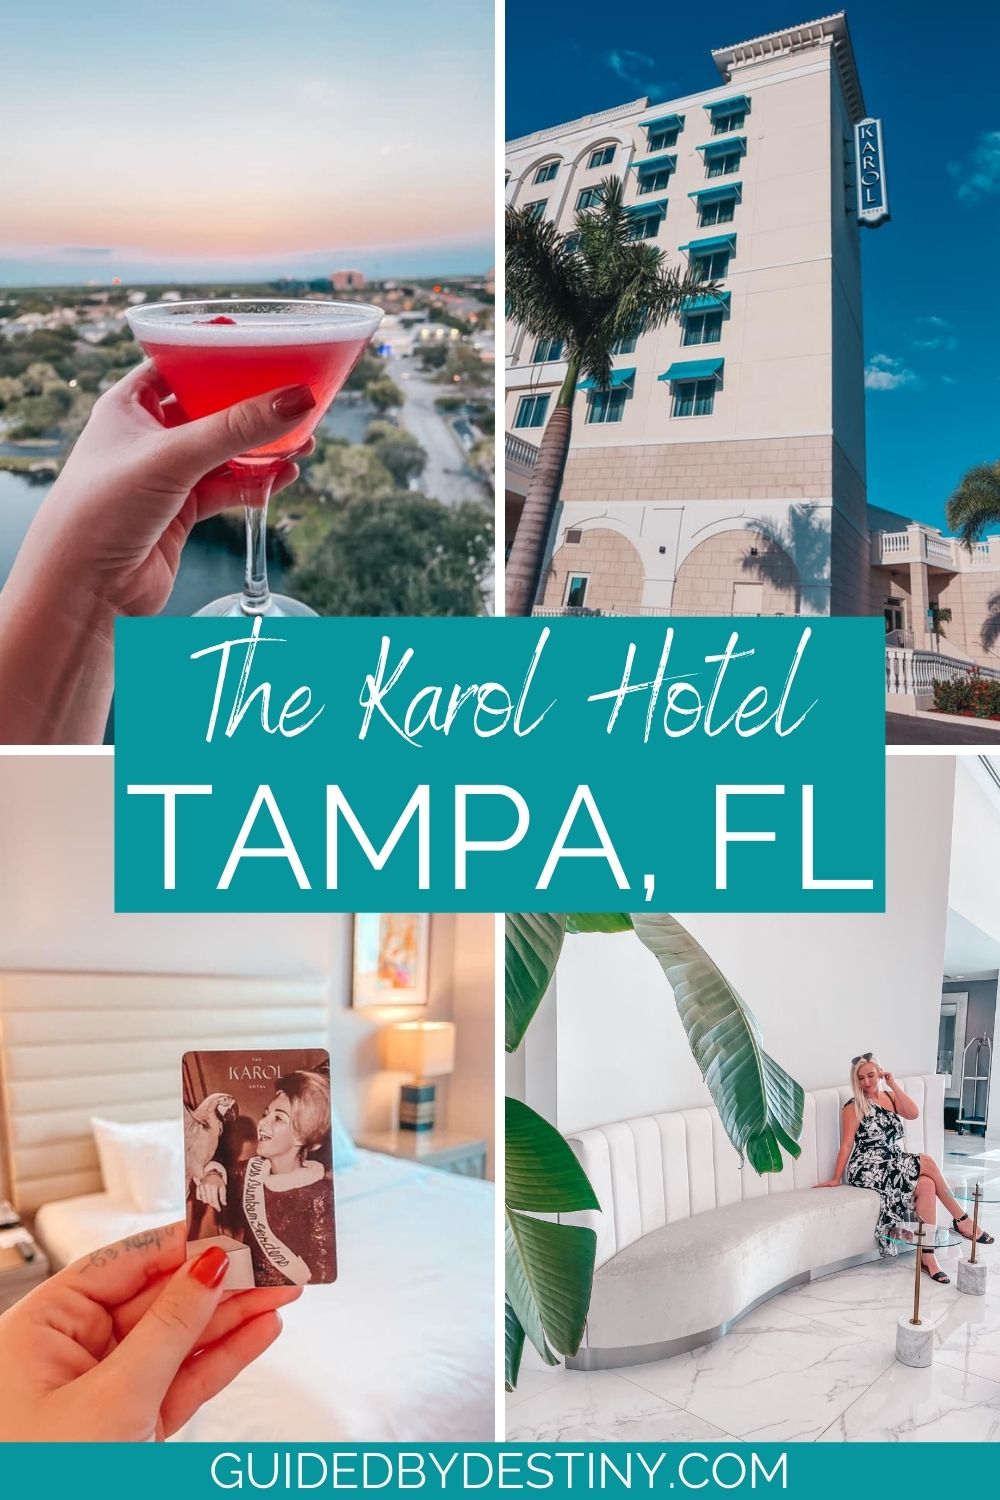 The Karol Hotel Tampa, FL